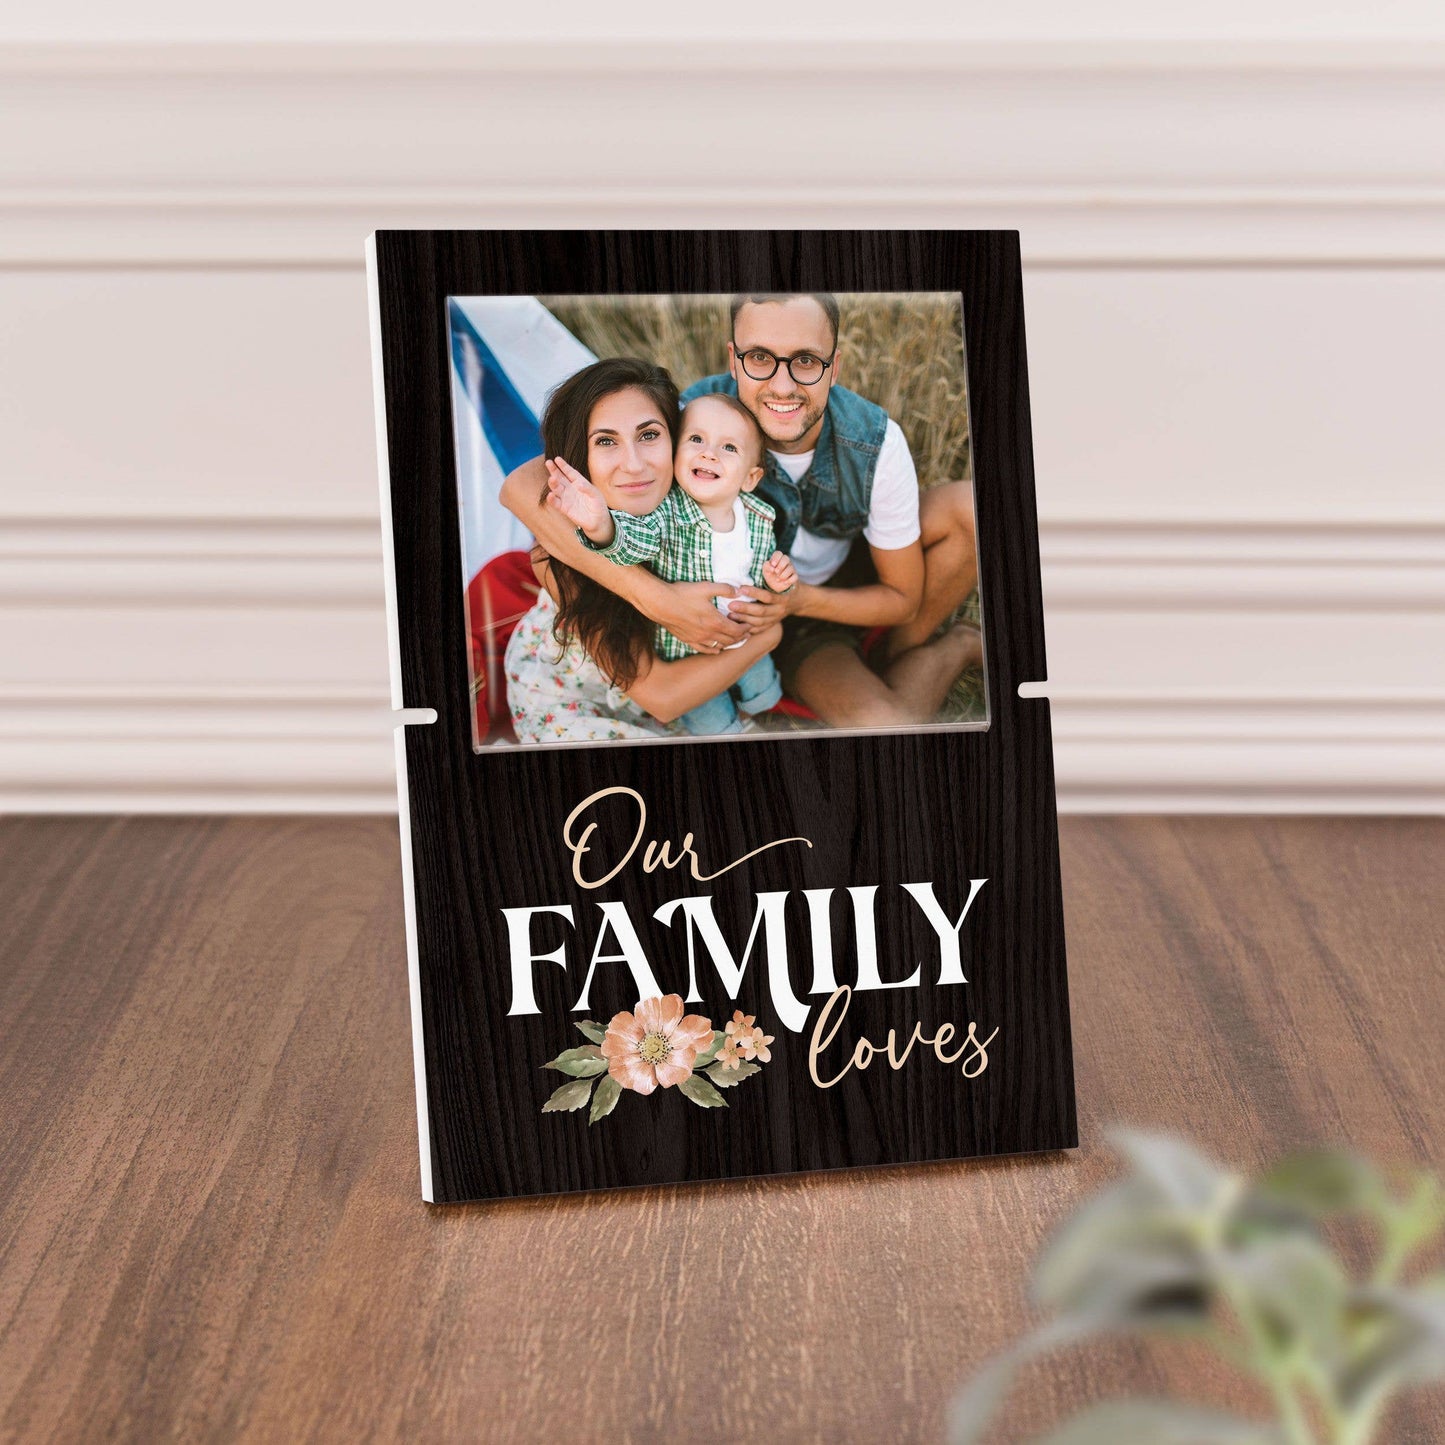 Our Family Loves Story Board/Frame